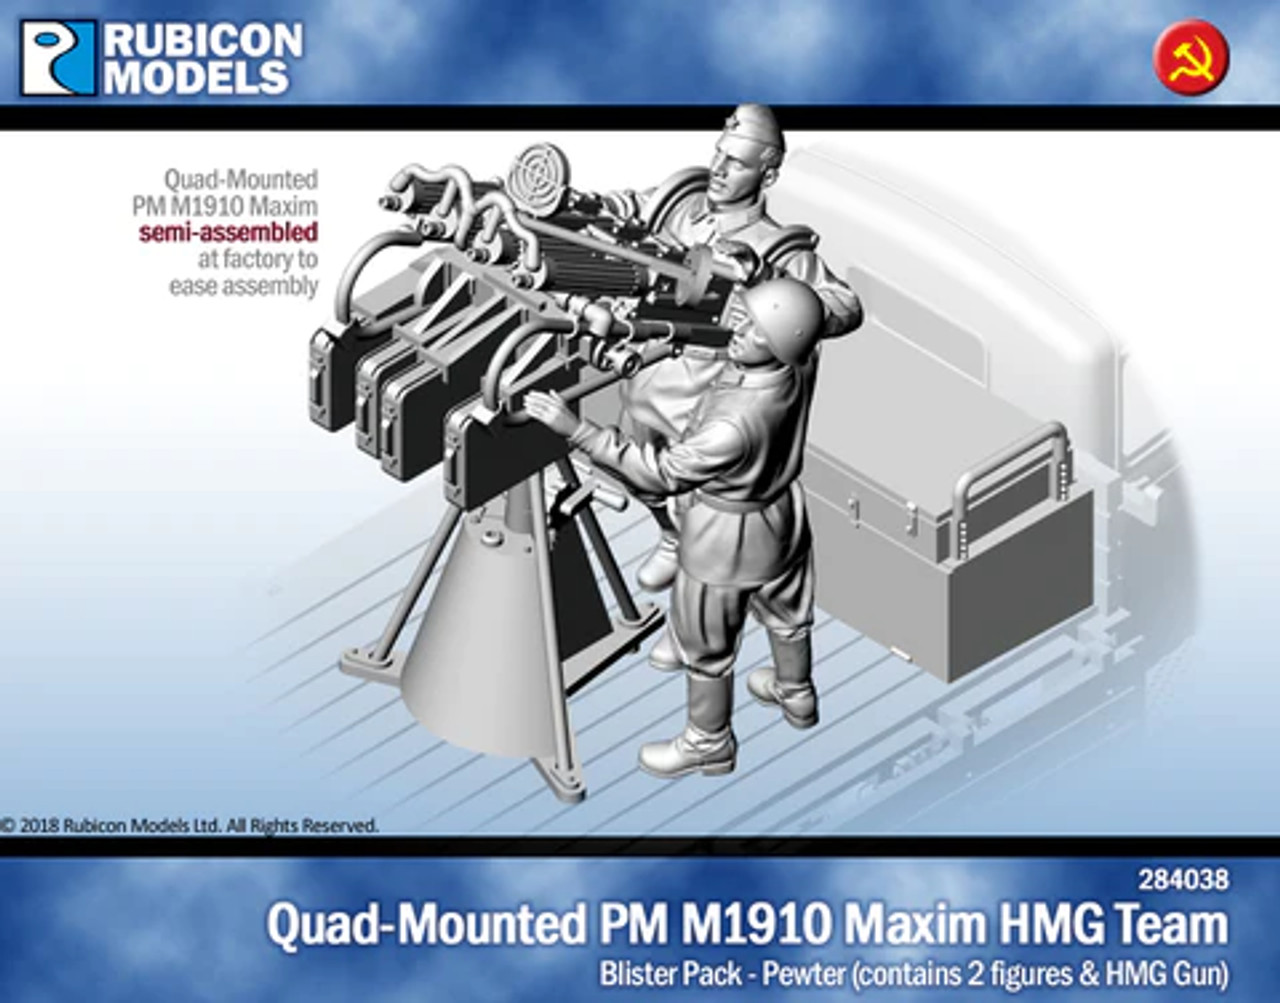 Quad-Mounted PM M1910 Maxim HMG - 284038